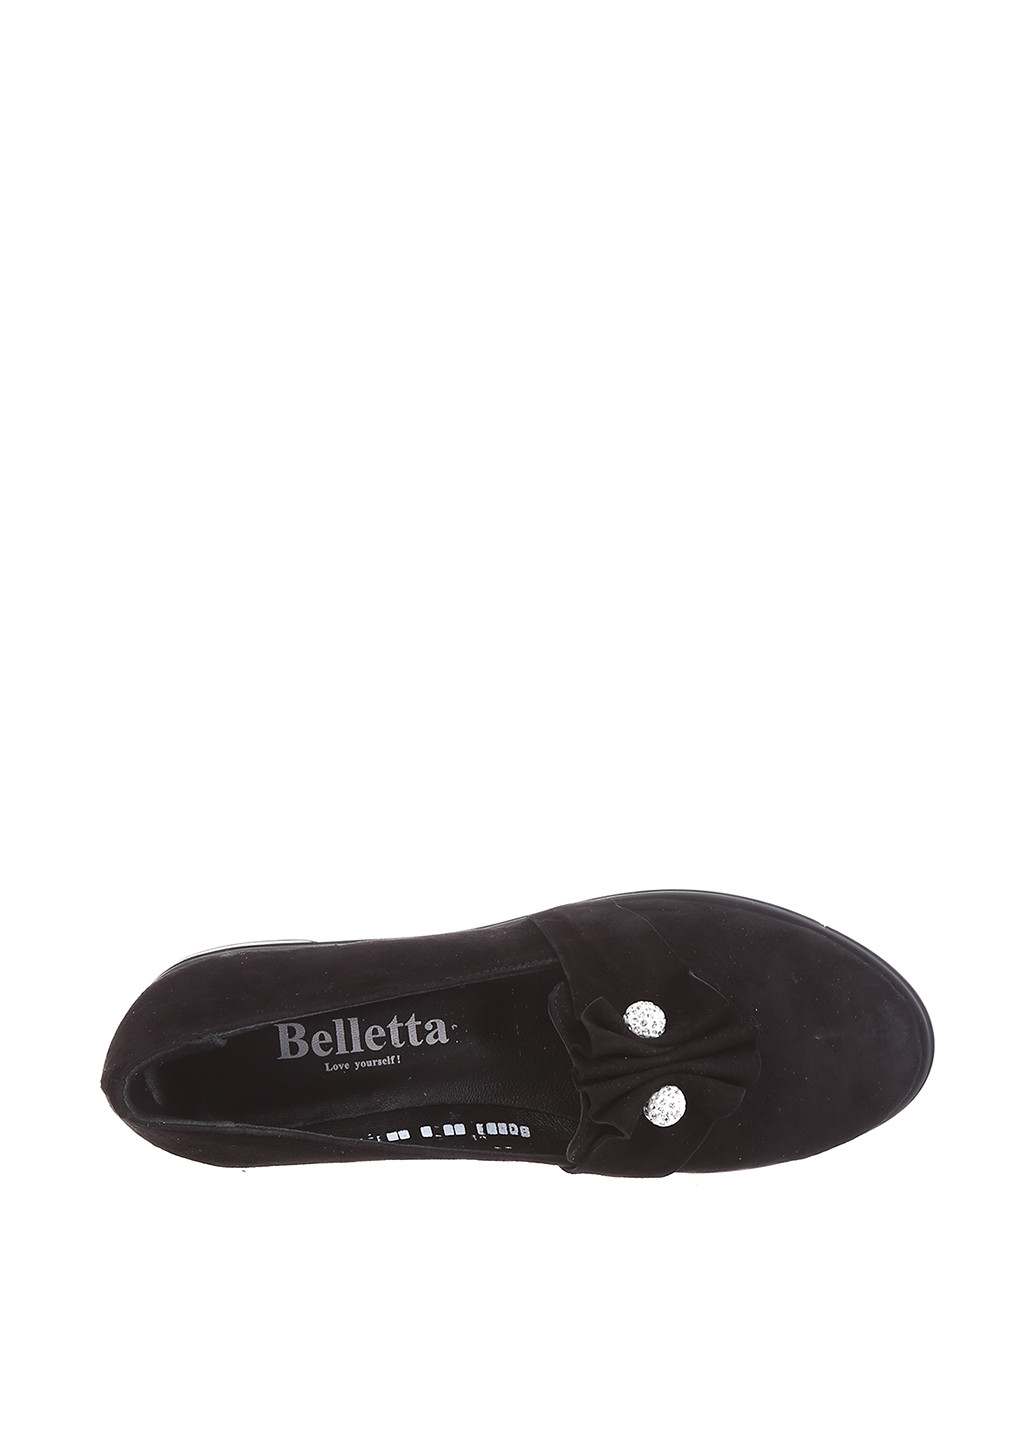 Туфли Belletta на низком каблуке с бусинами